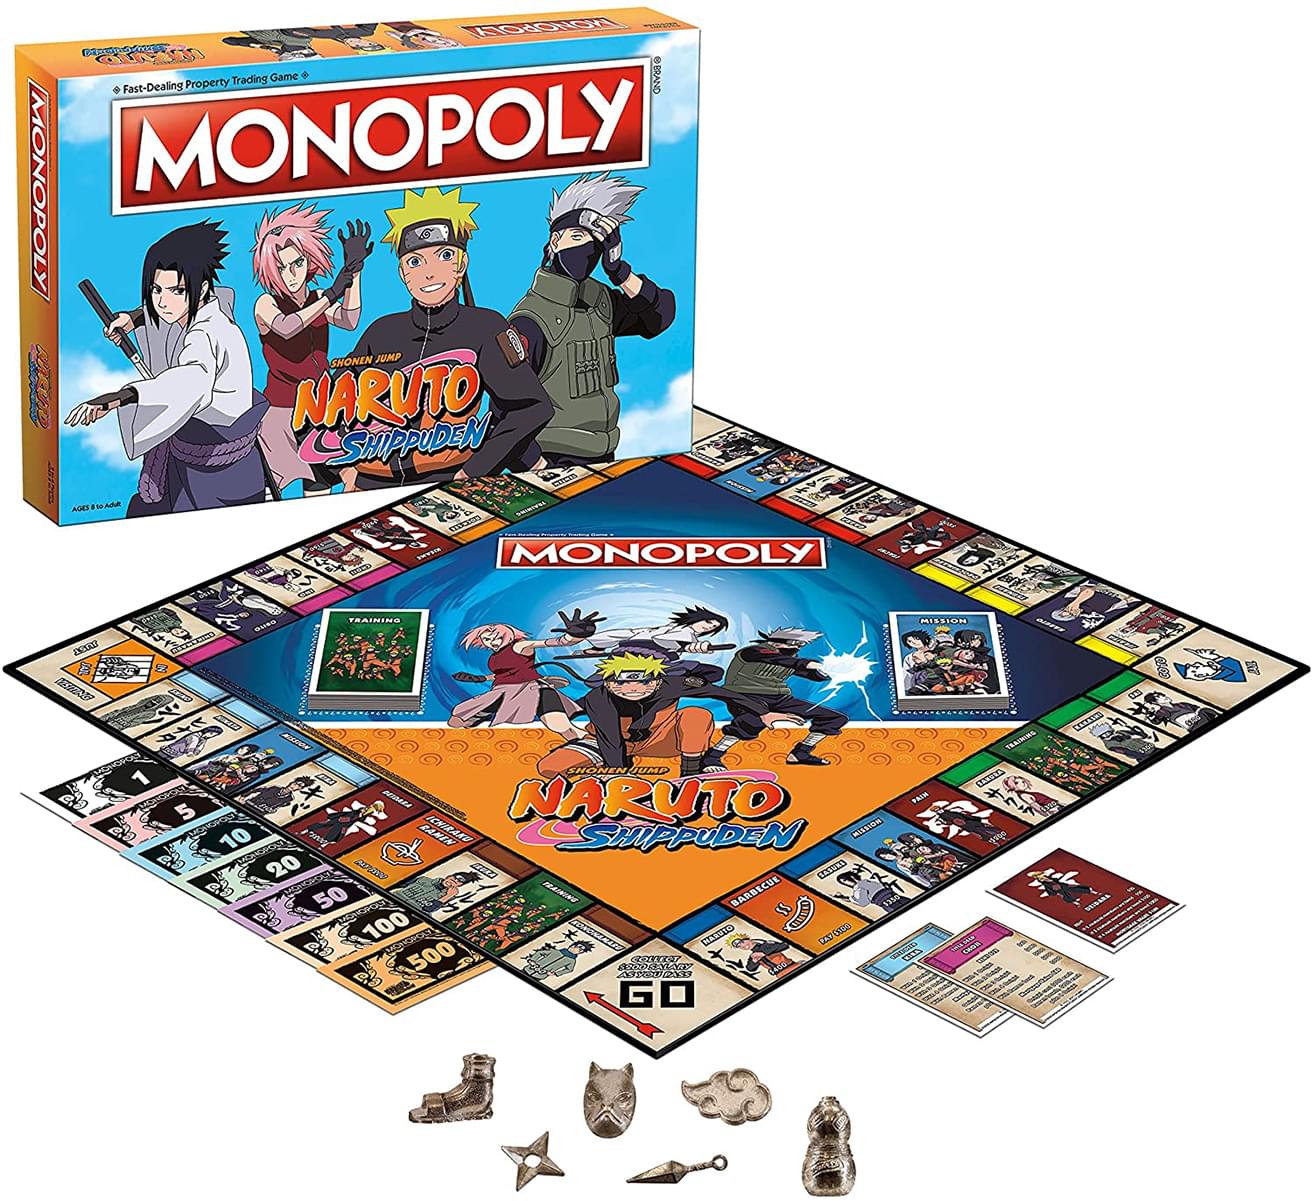 naruto monopoly